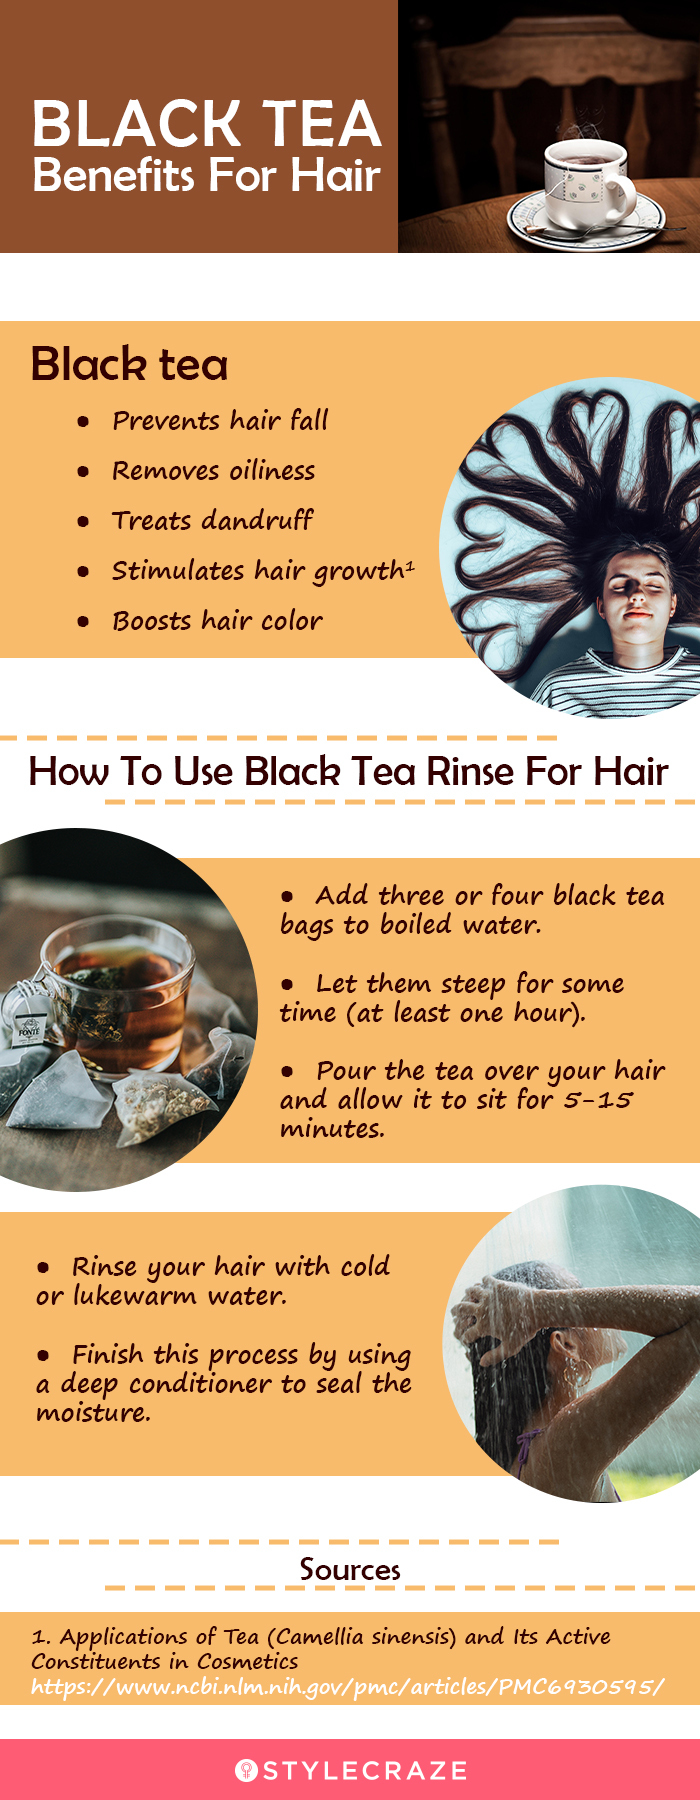 black tea benefits of hair [infographic]